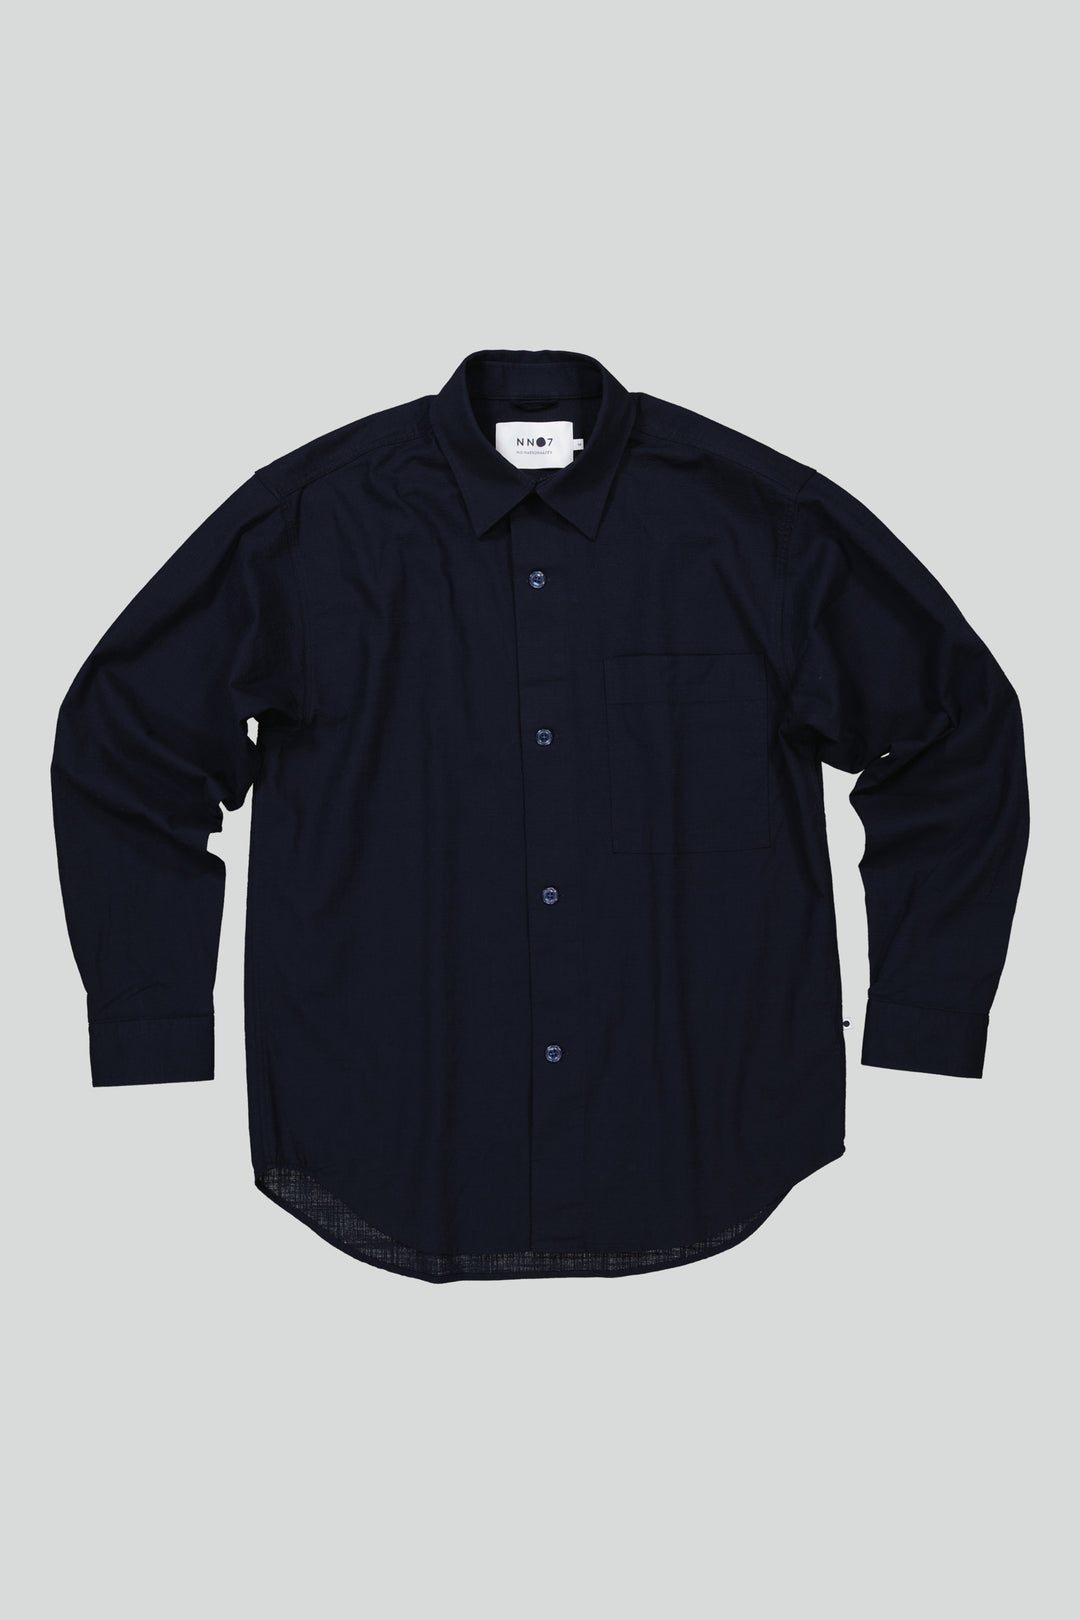 NN07 - Adwin 5634 Cotton Shirt in Navy Blue | Buster McGee